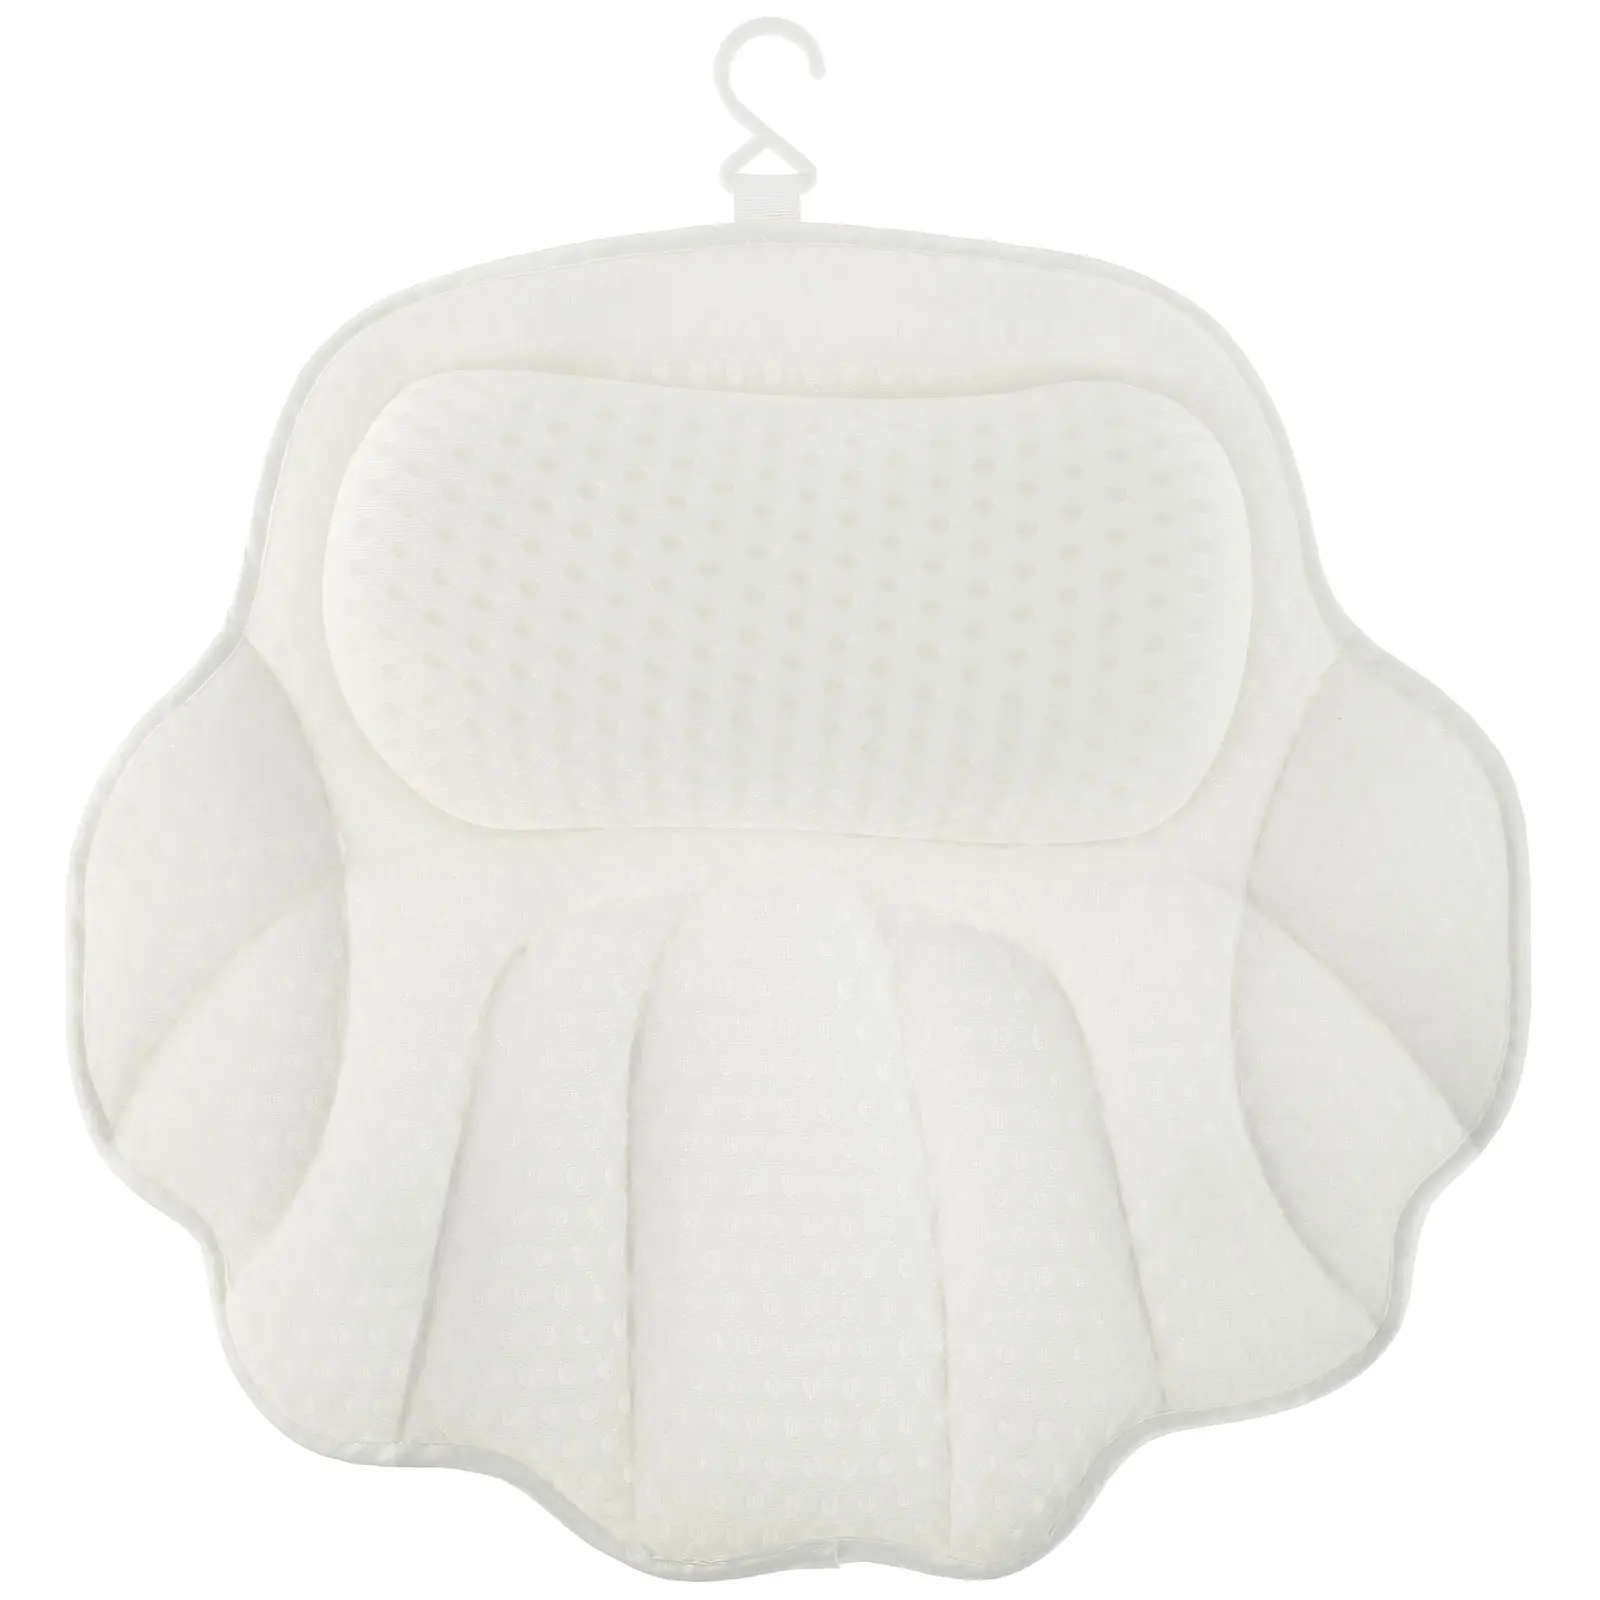 

New Bath Pillow with 6 Powerful Suction Cups 4D Breathable Mesh Bathtub Spa Pillow Ergonomic Bathtub Cushion Soft Bath Tub